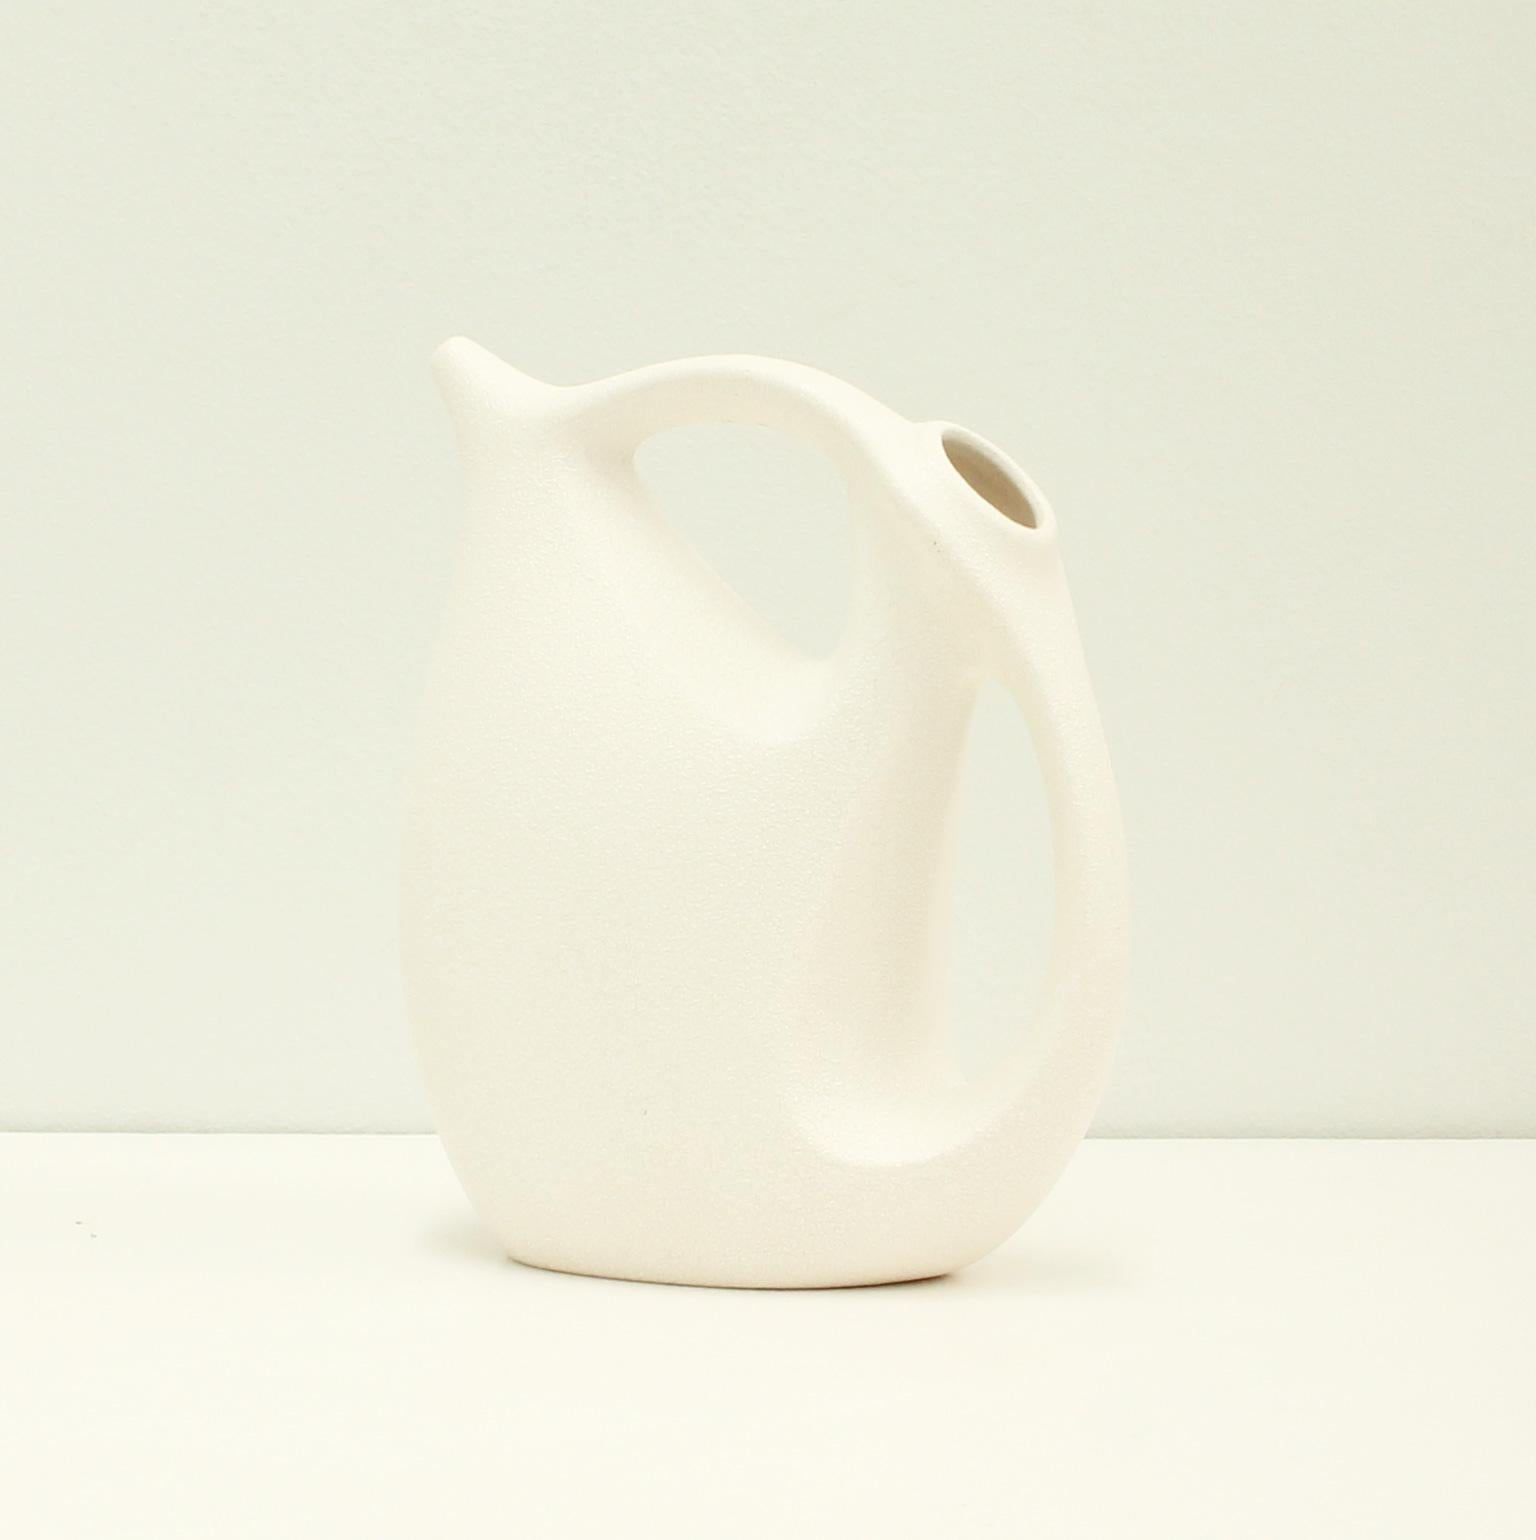 Sculptural ceramic jug vase designed by Roberto Rigon and produced by Bertoncello, Italy, 1970's. Ceramic in matte white grainy glaze.